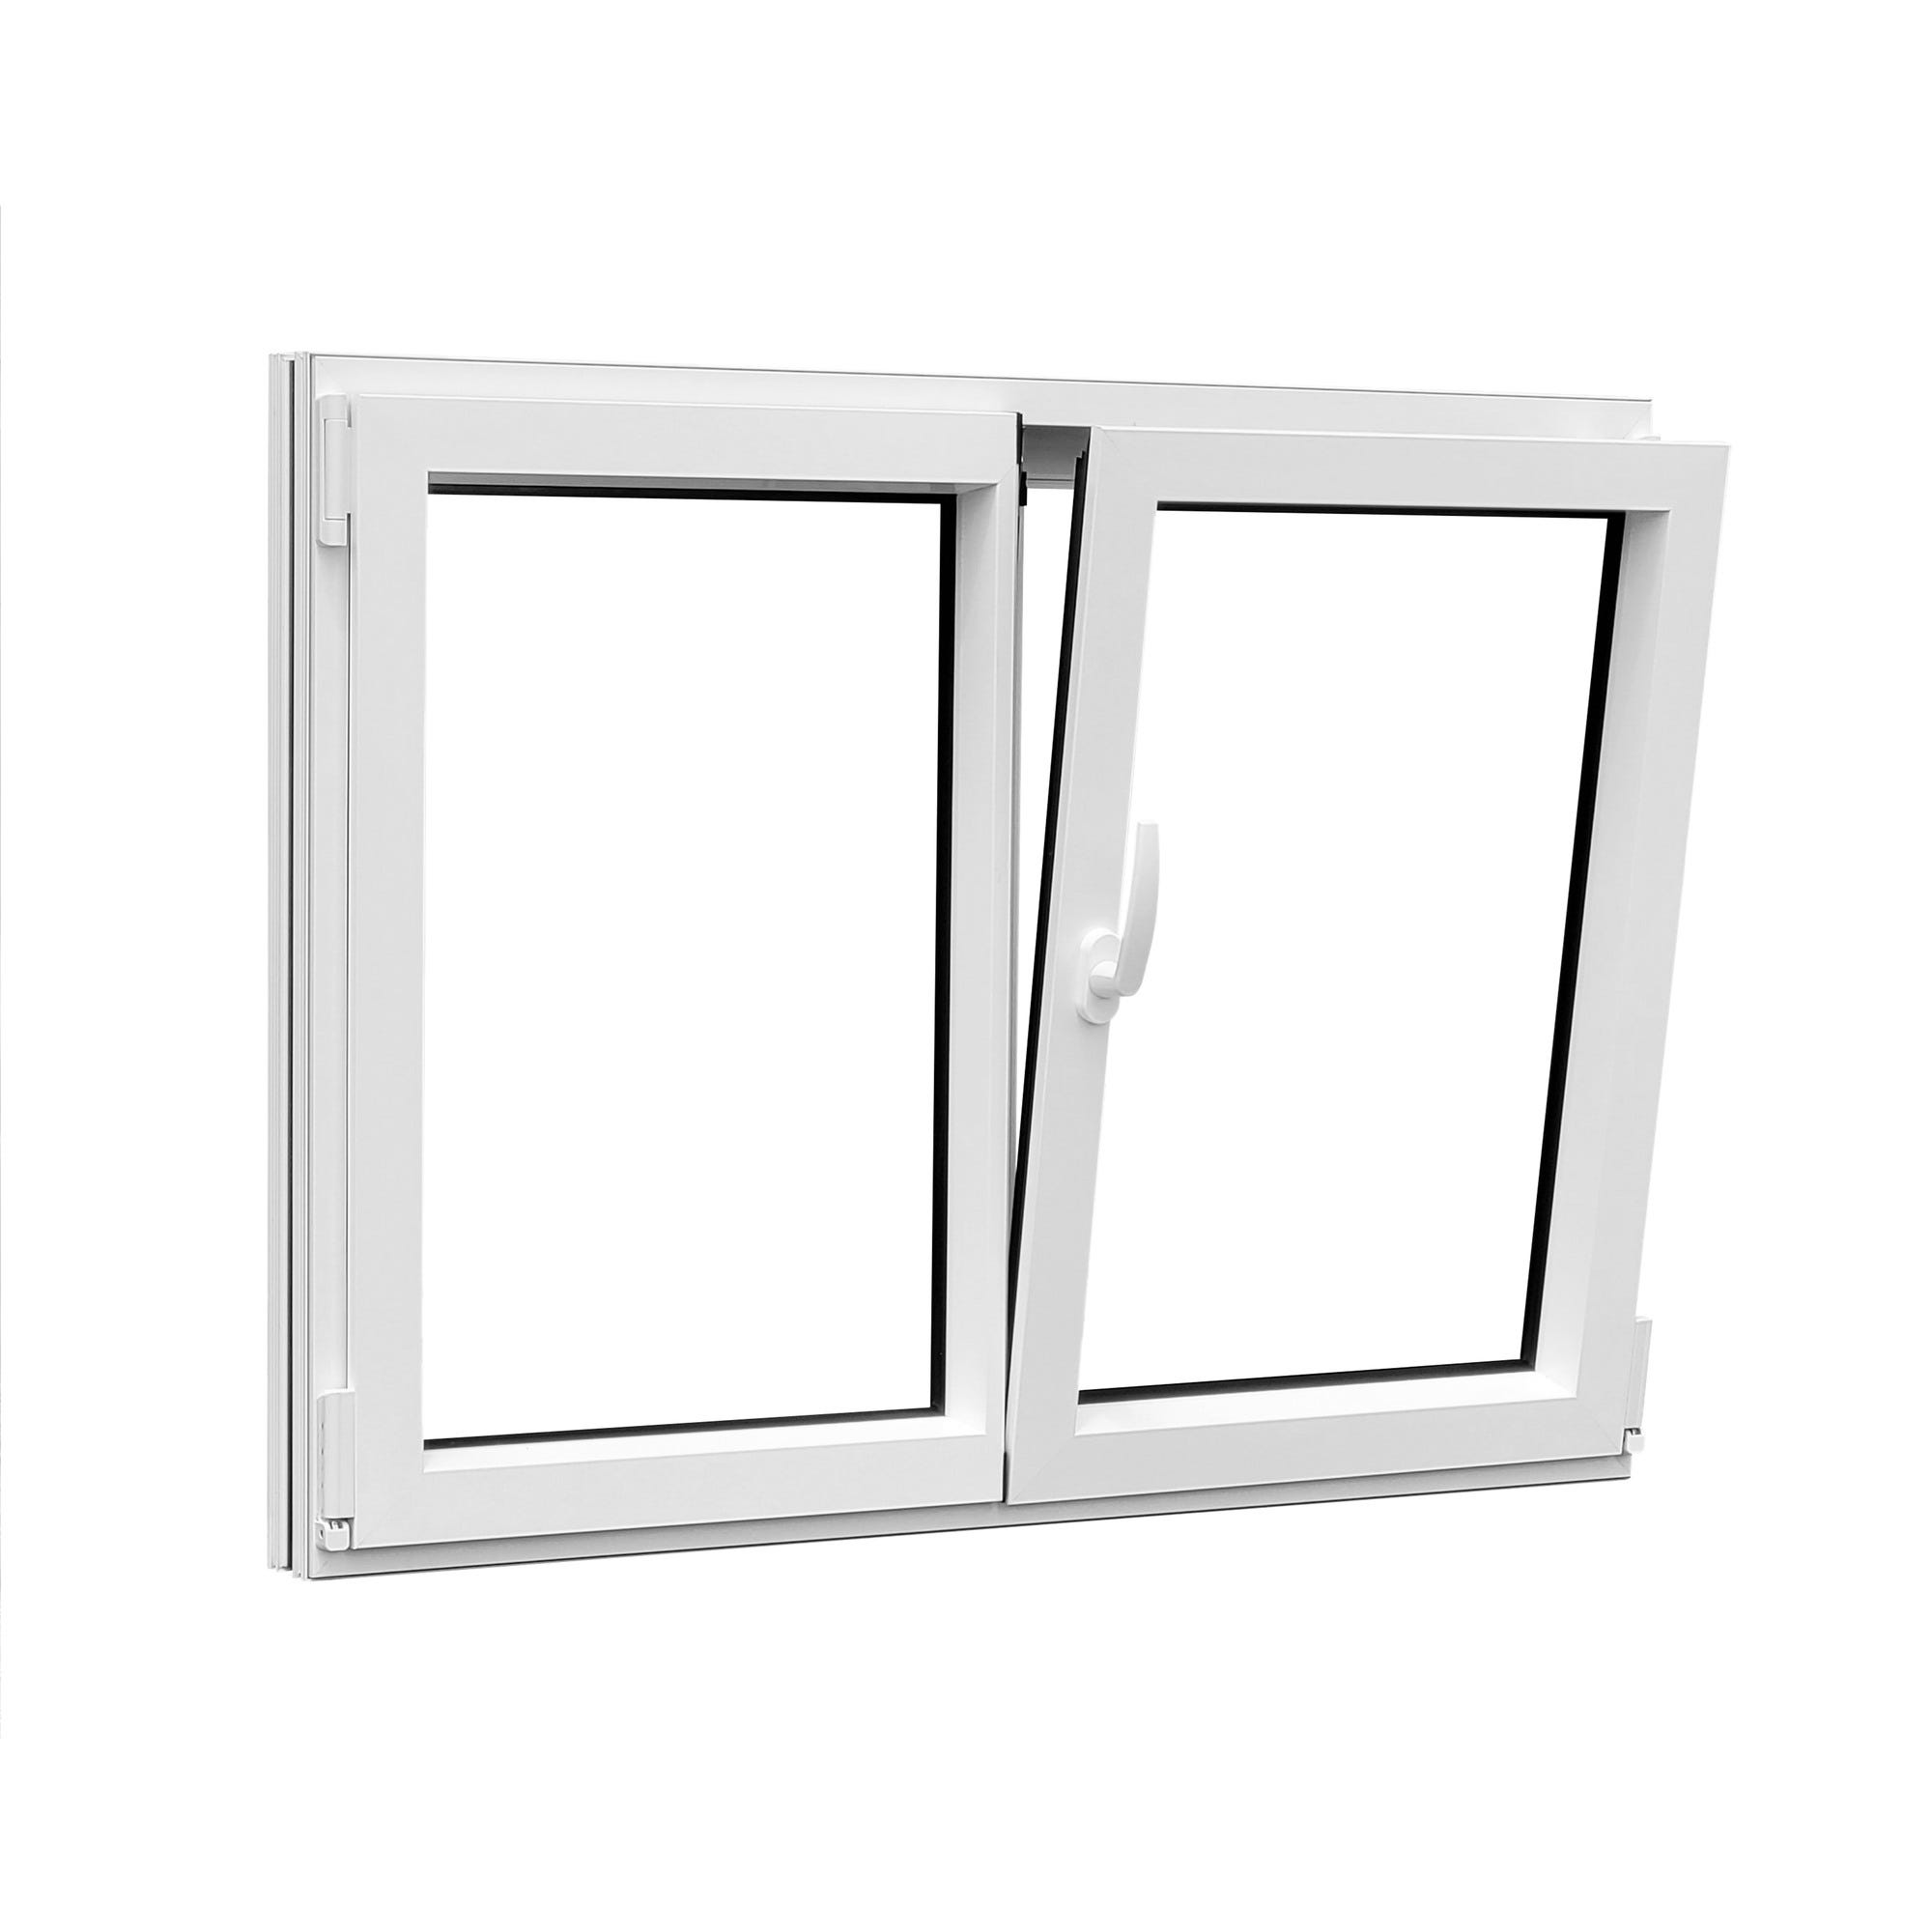 Fenêtre aluminium H.75 x l.100 cm oscillo-battant 2 vantaux blanc 1